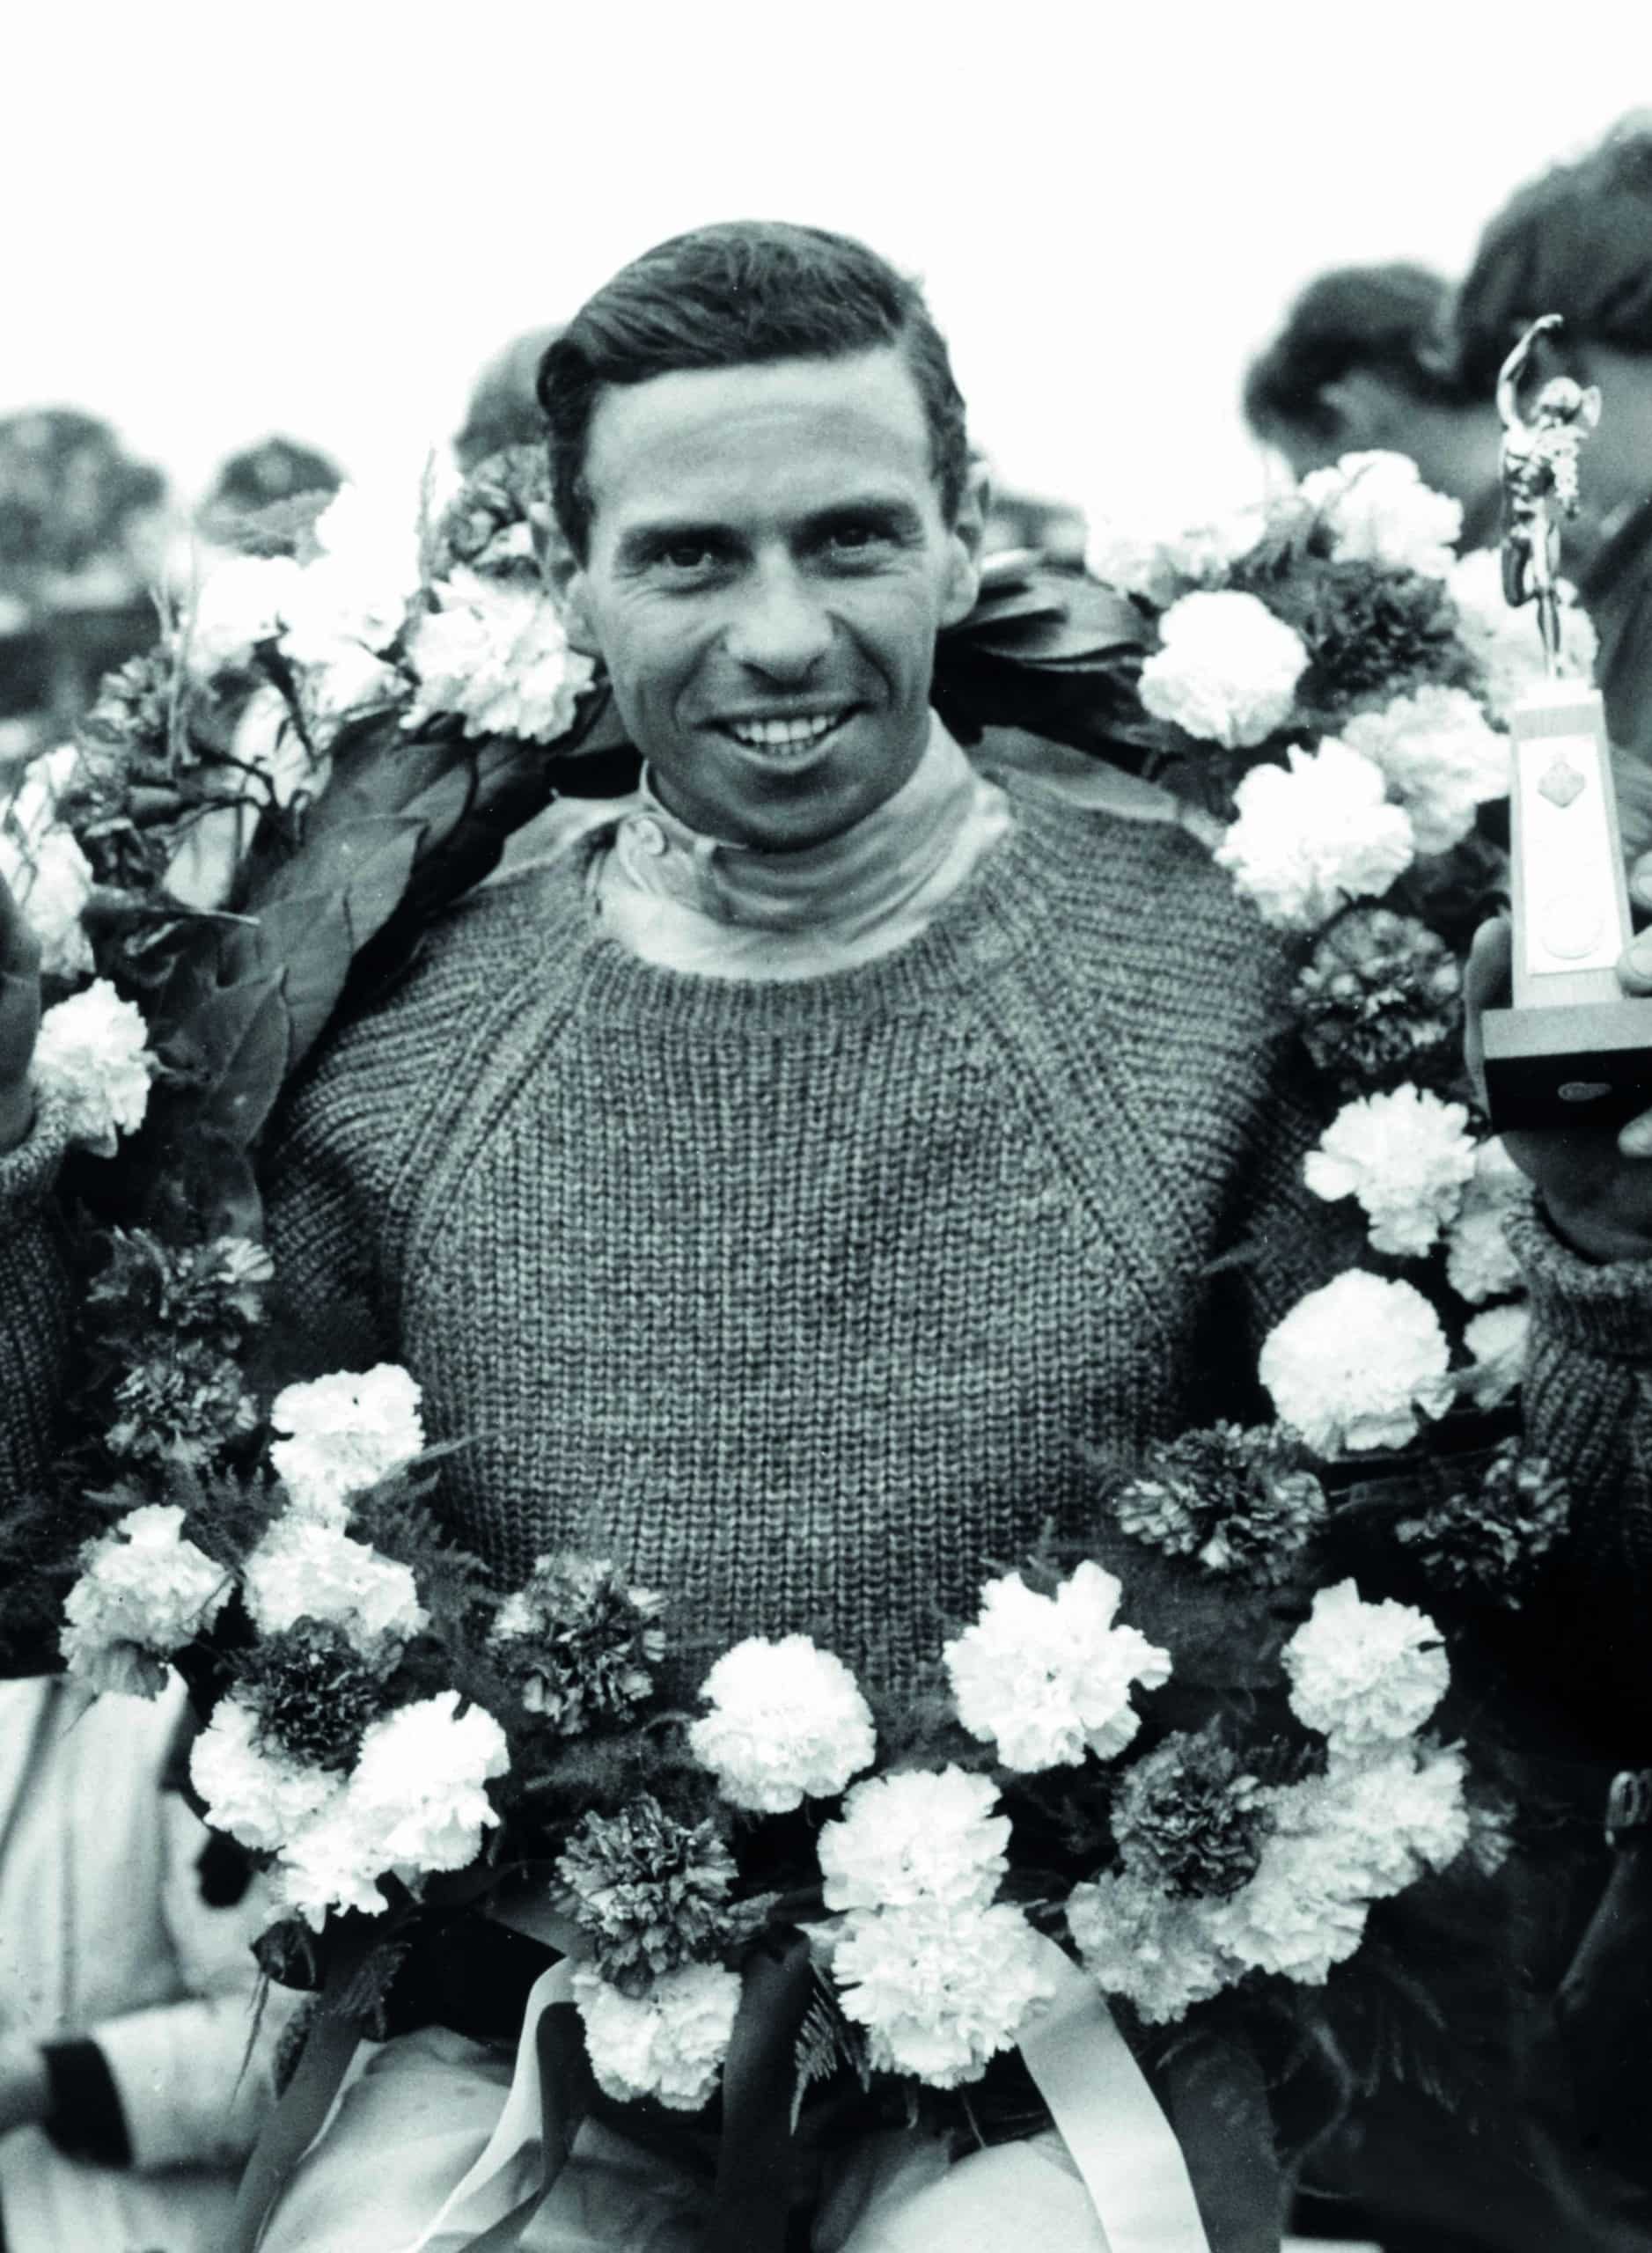 Jim-Clark-celebrates-winning-the-1965-British-Grand-Prix-at-Silverstone-with-a-garland-around-his-neck